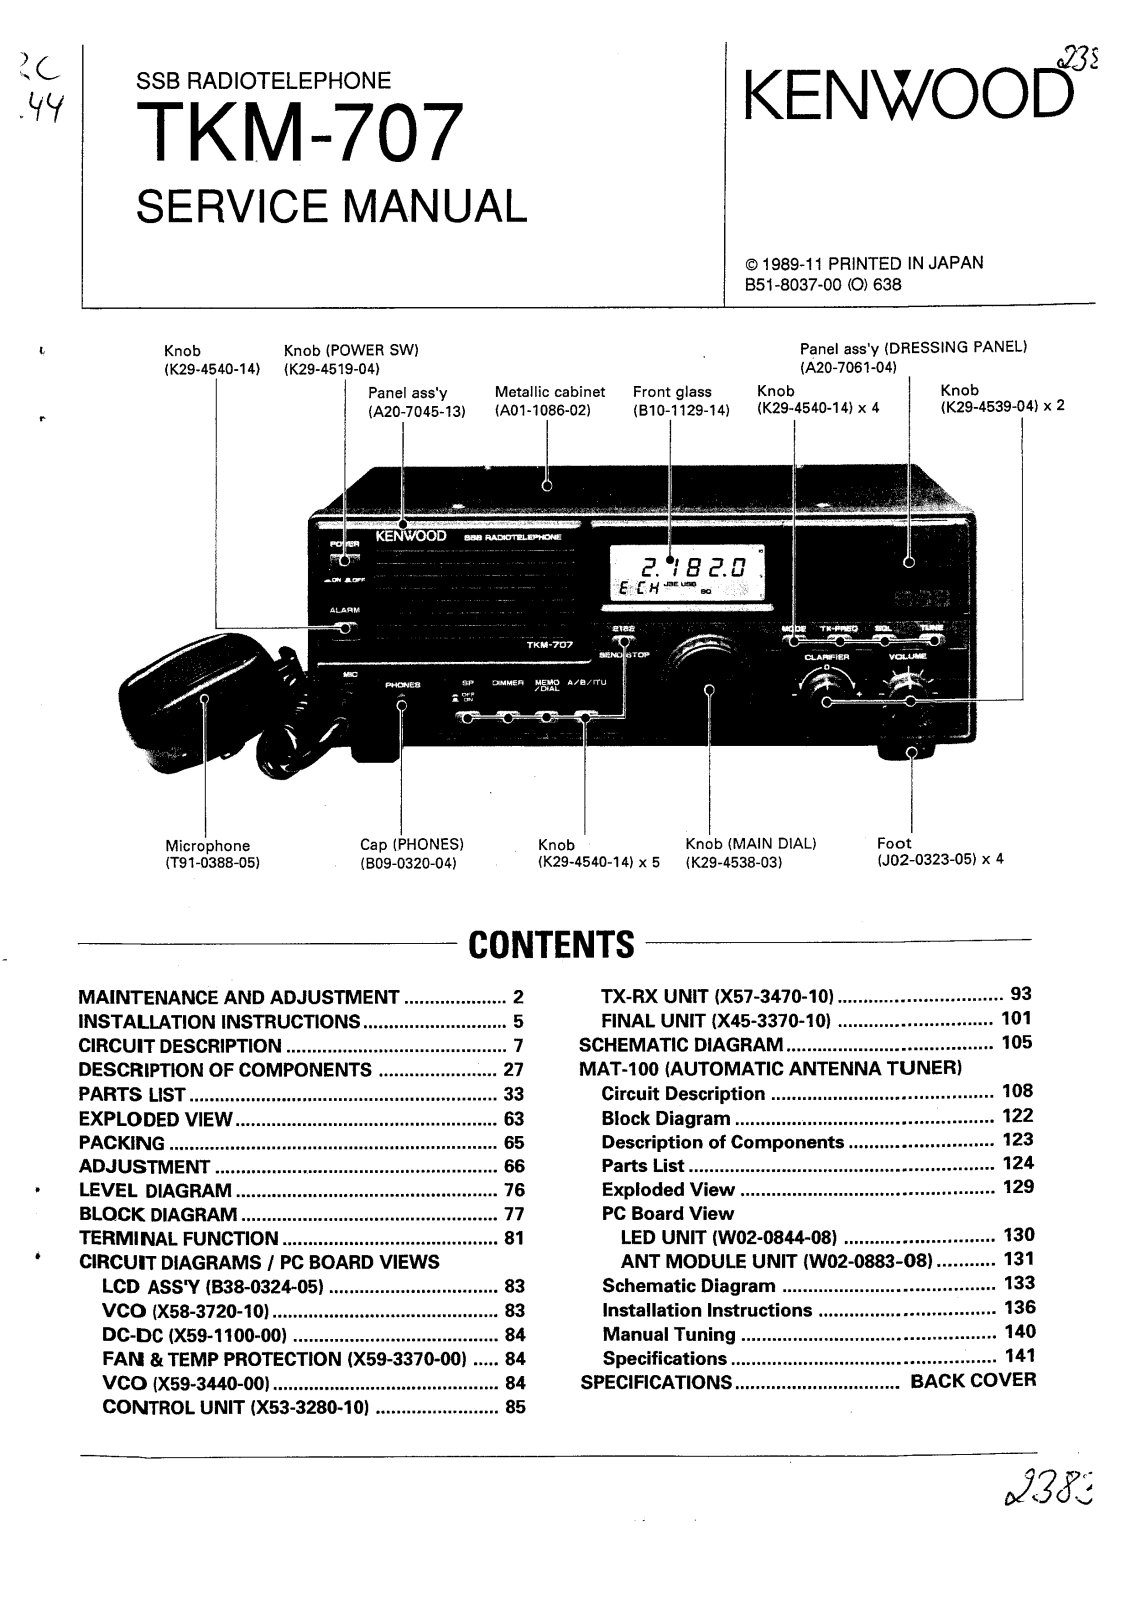 Kenwood TKM-707 Service Manual